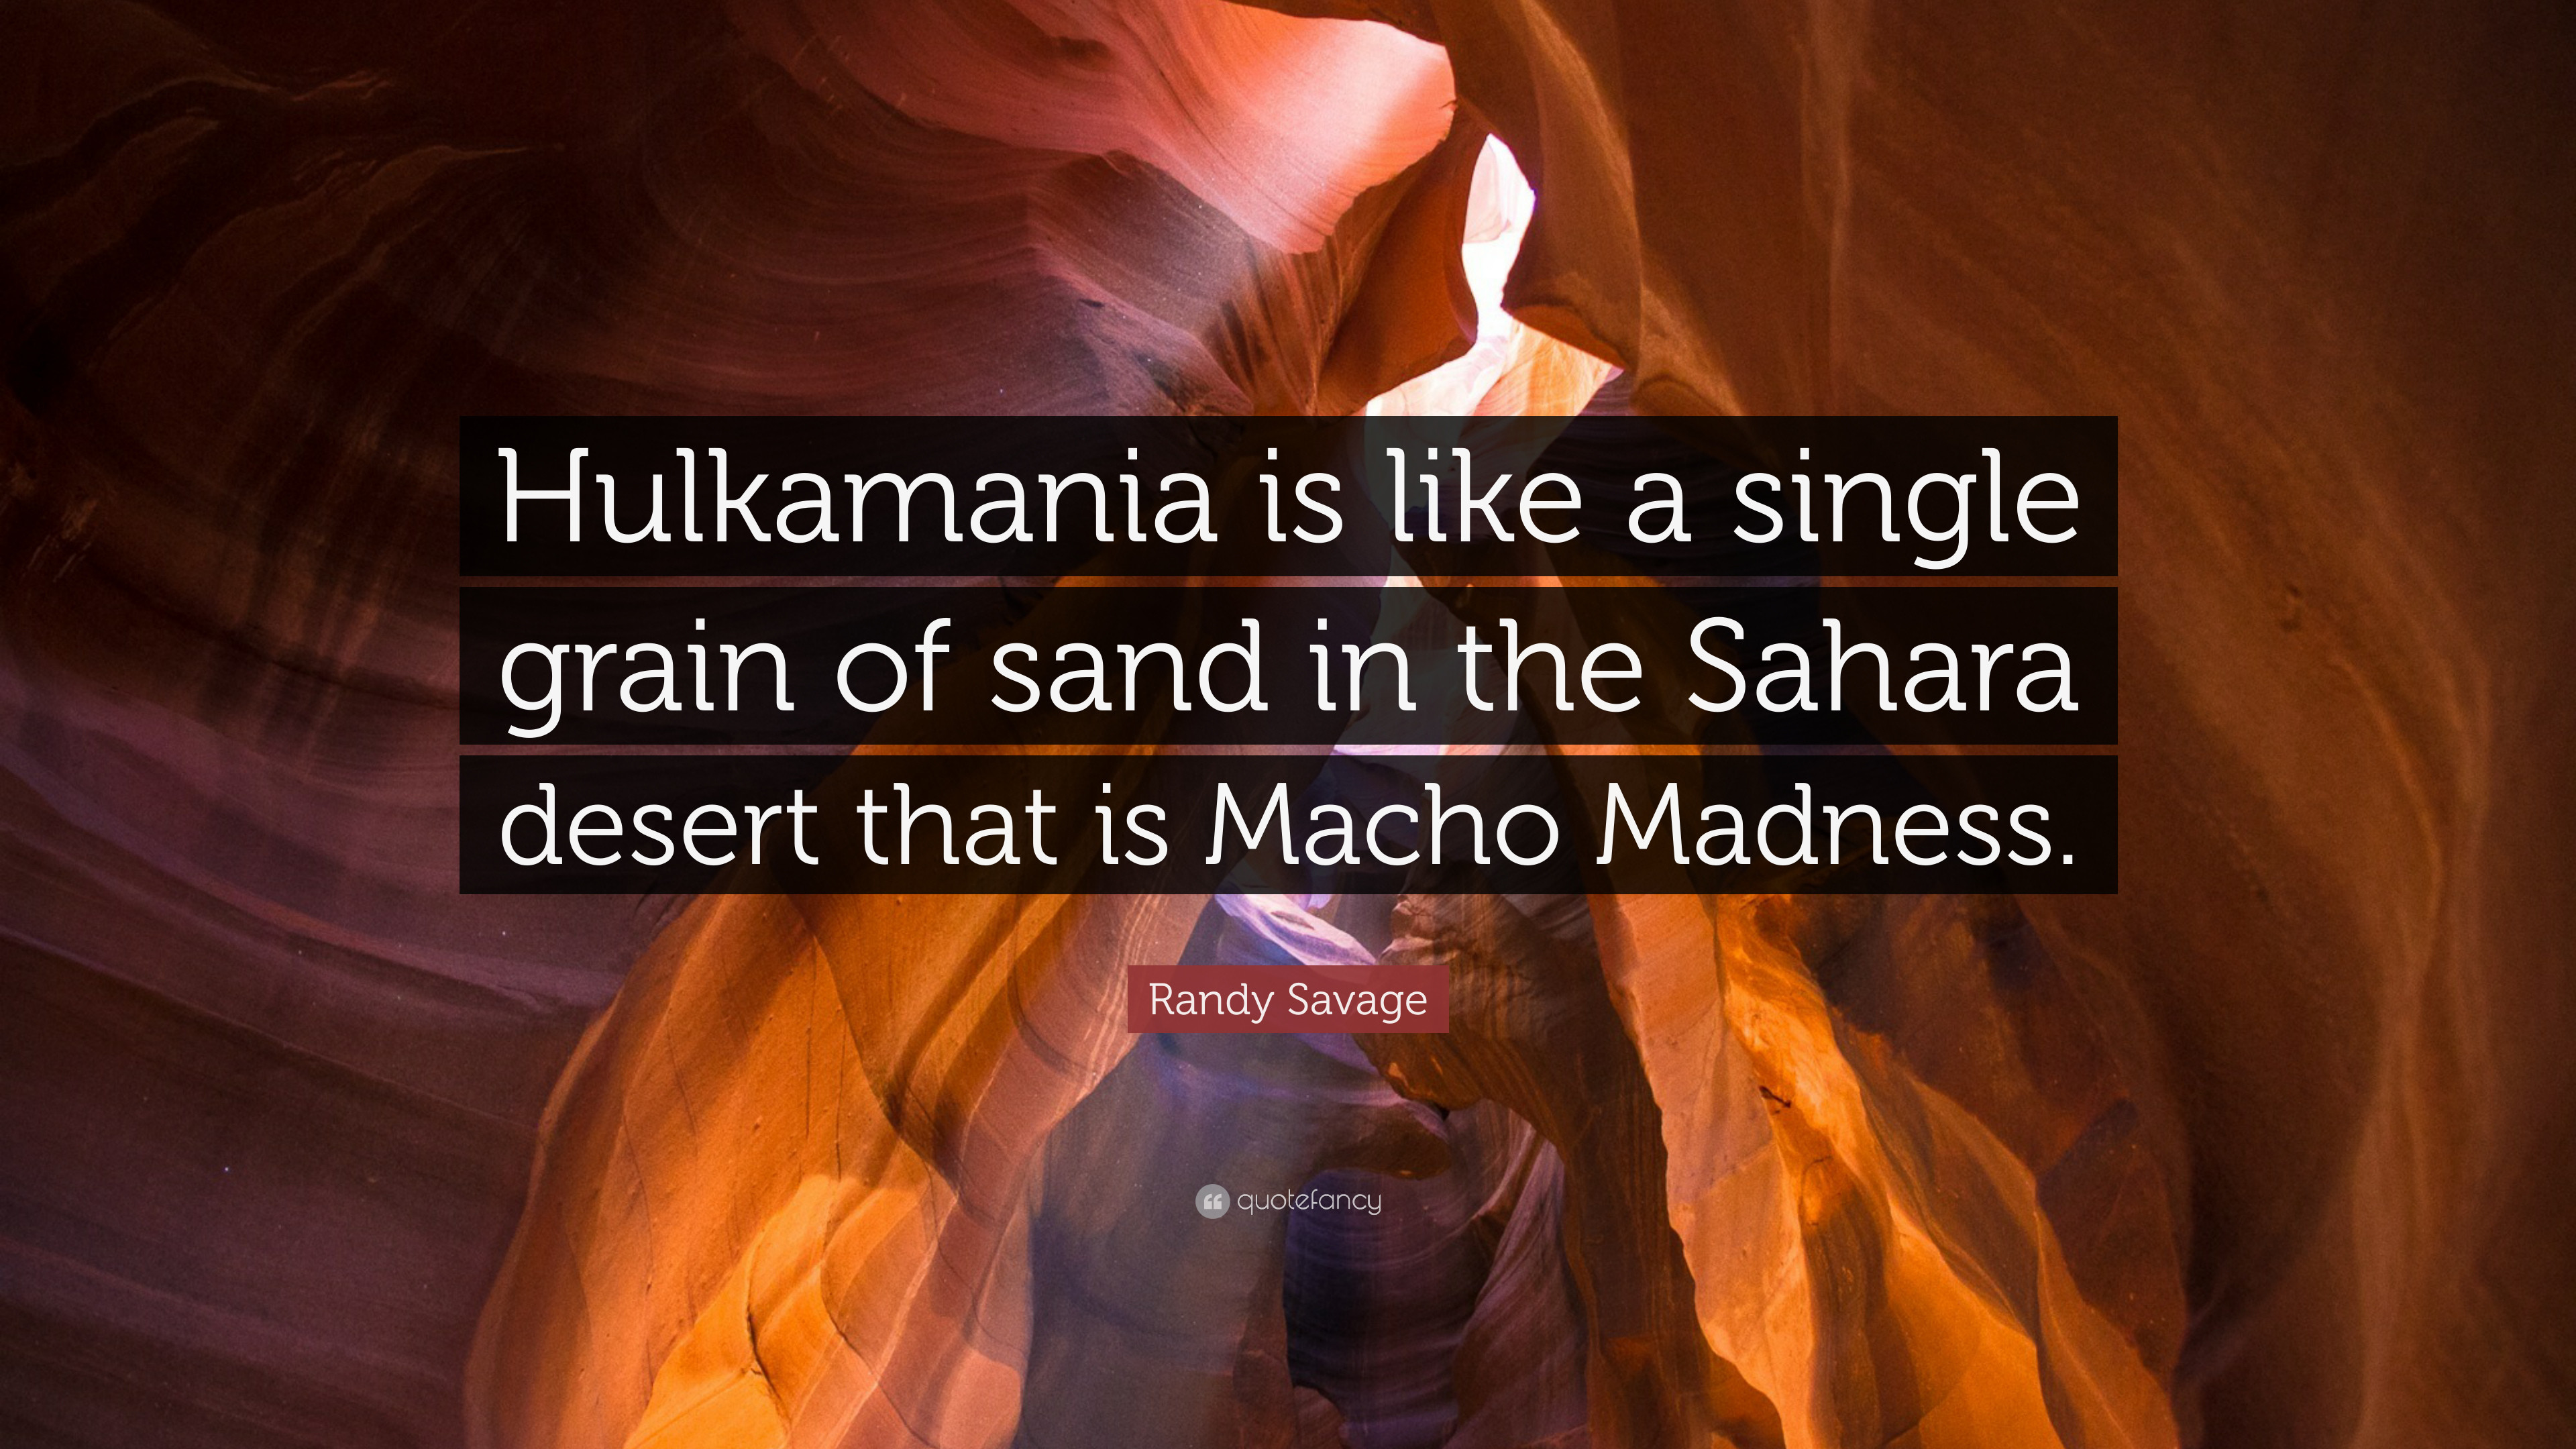 Randy Savage Quote: “Hulkamania is like a single grain of sand in the Sahara